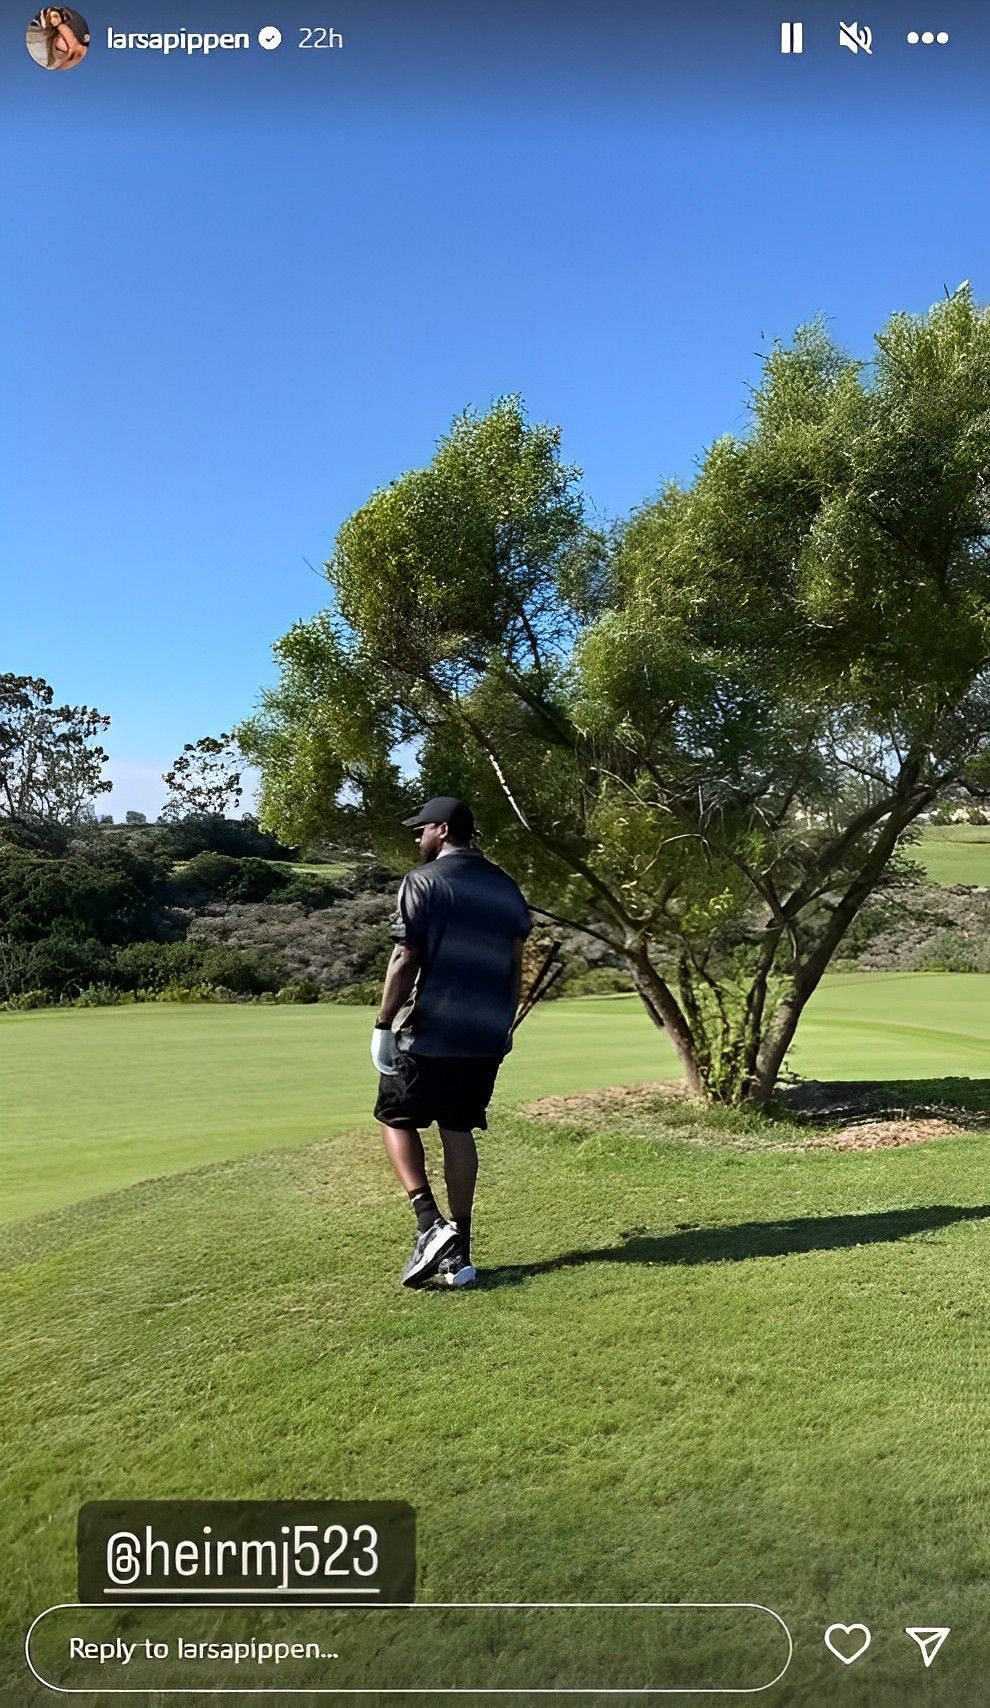 Jordan strolls around the golf course